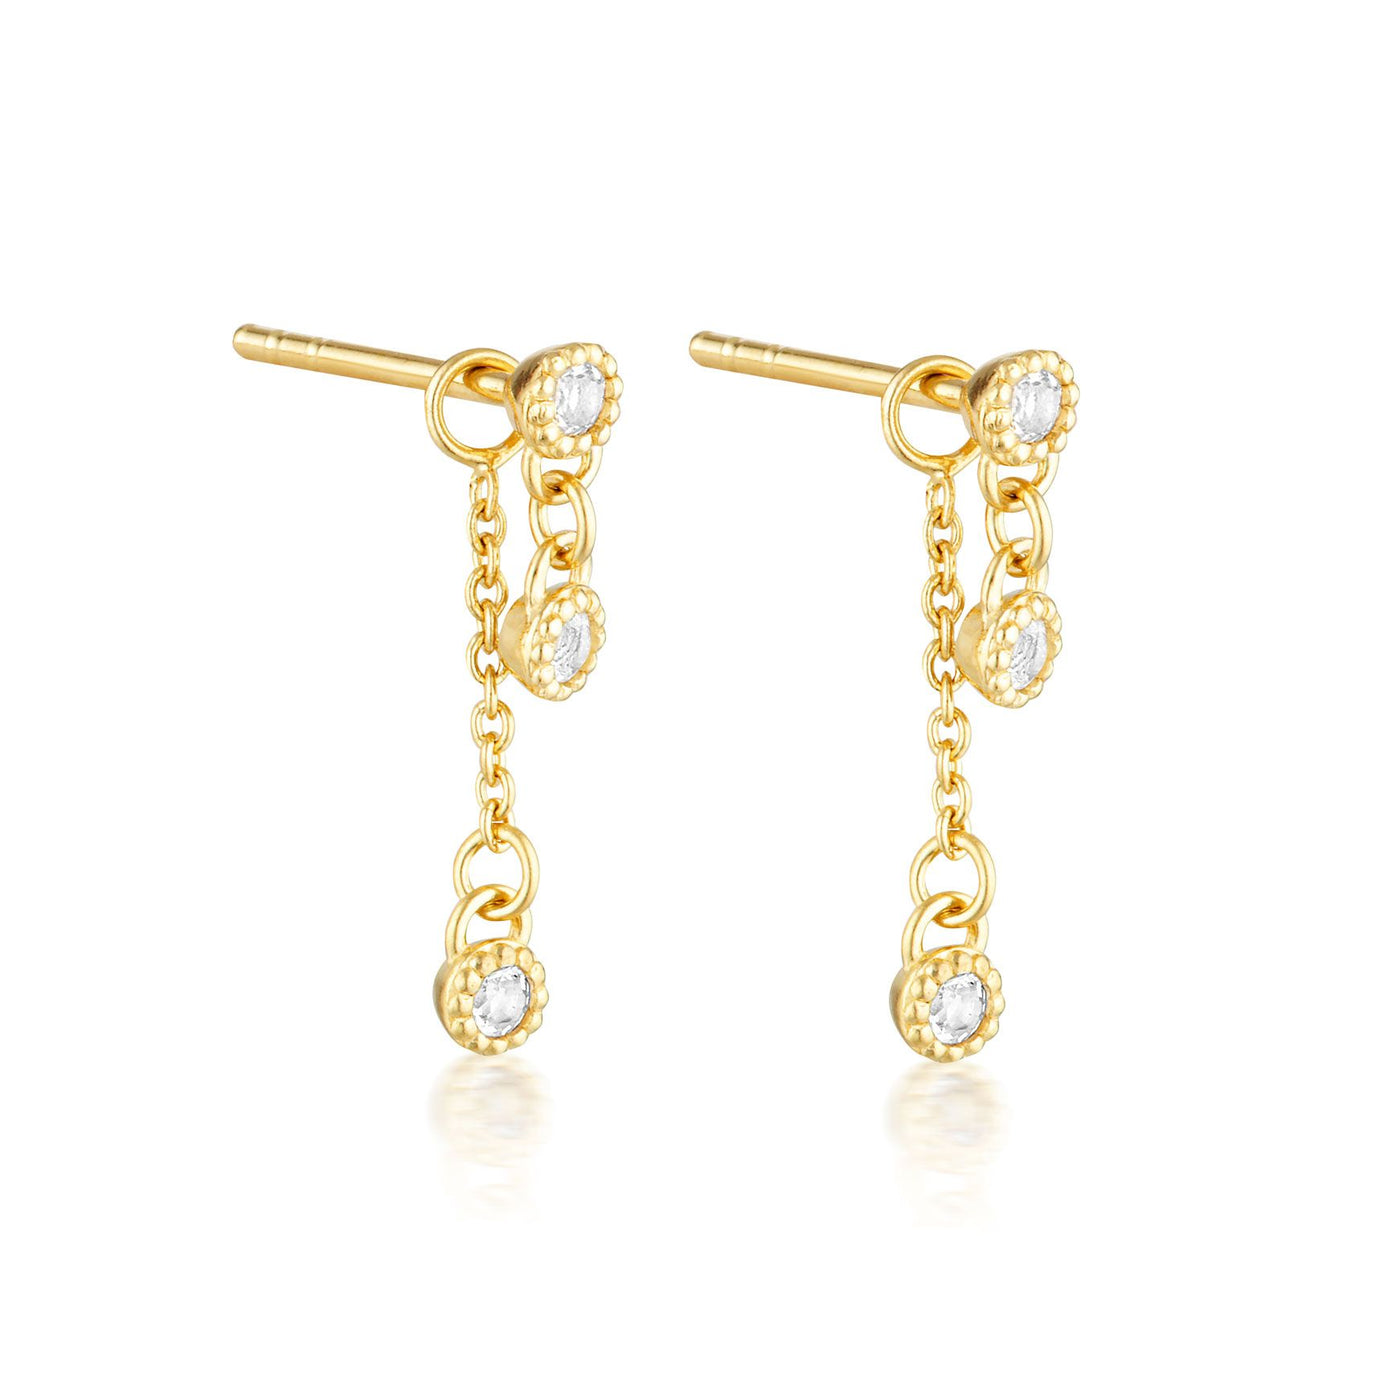 Linda Tahija White Topaz Meteor Chain Stud Earrings, Gold